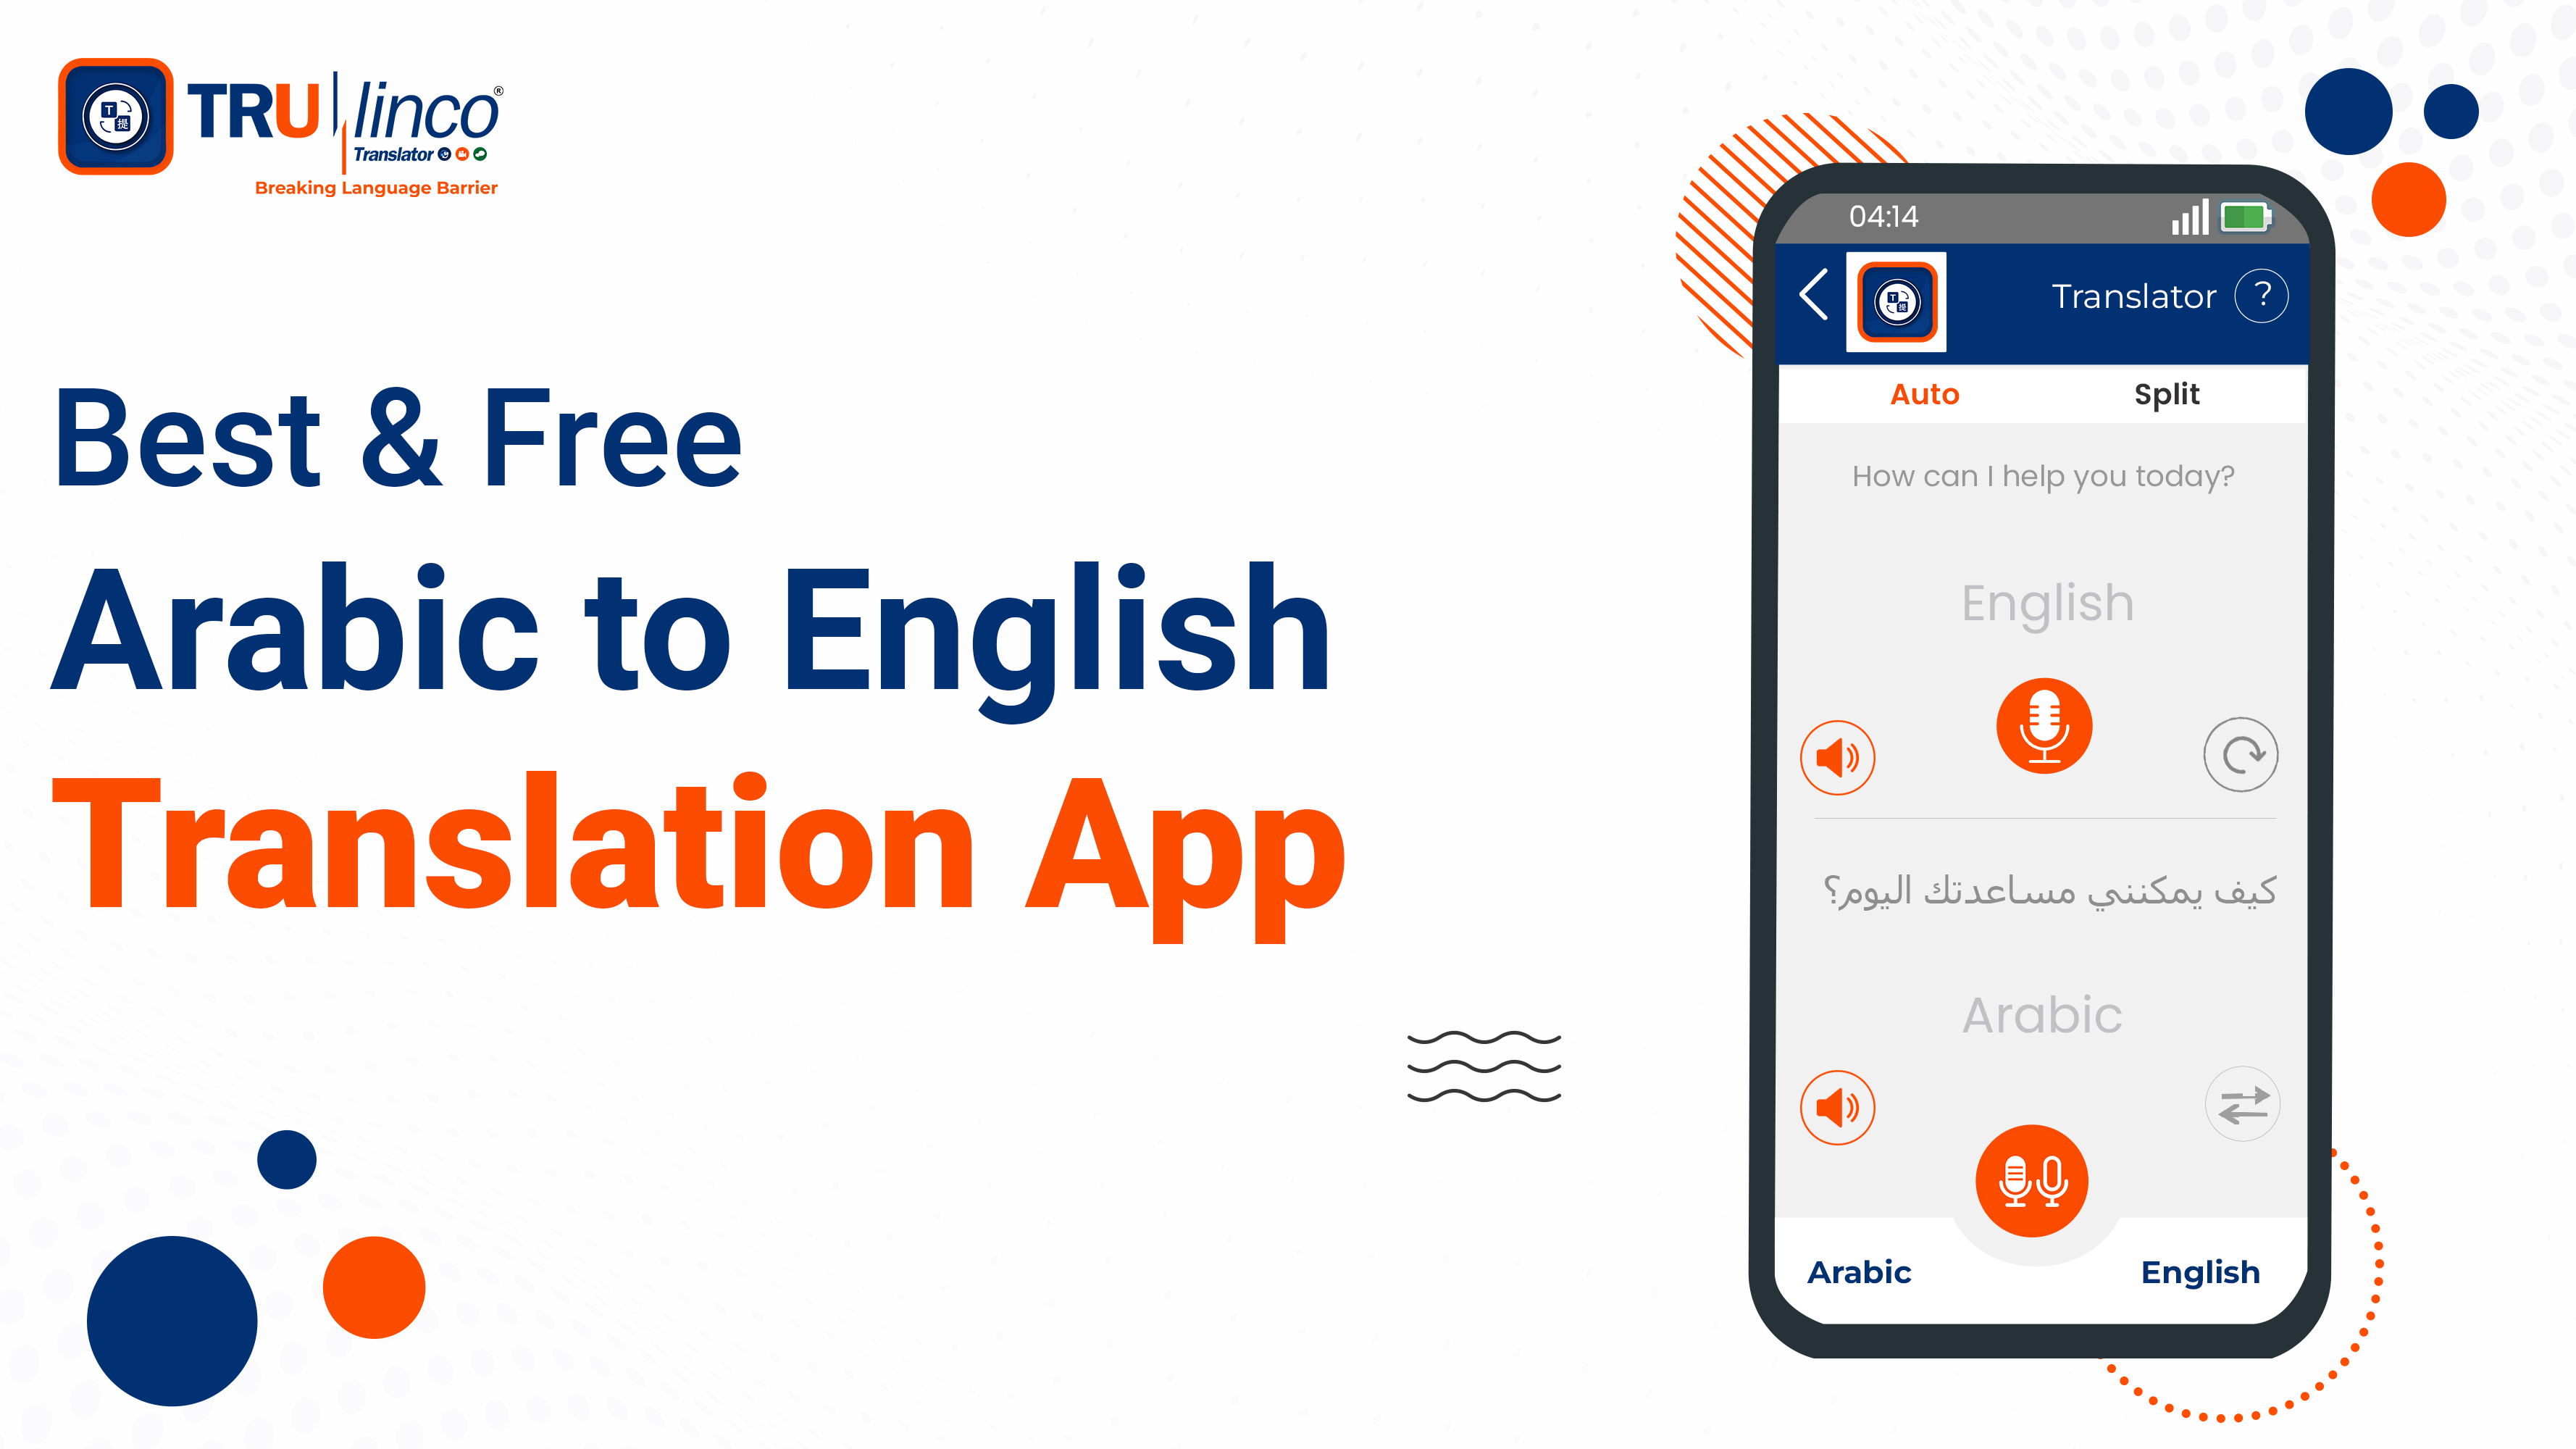 Best & Free Arabic to English Translation App